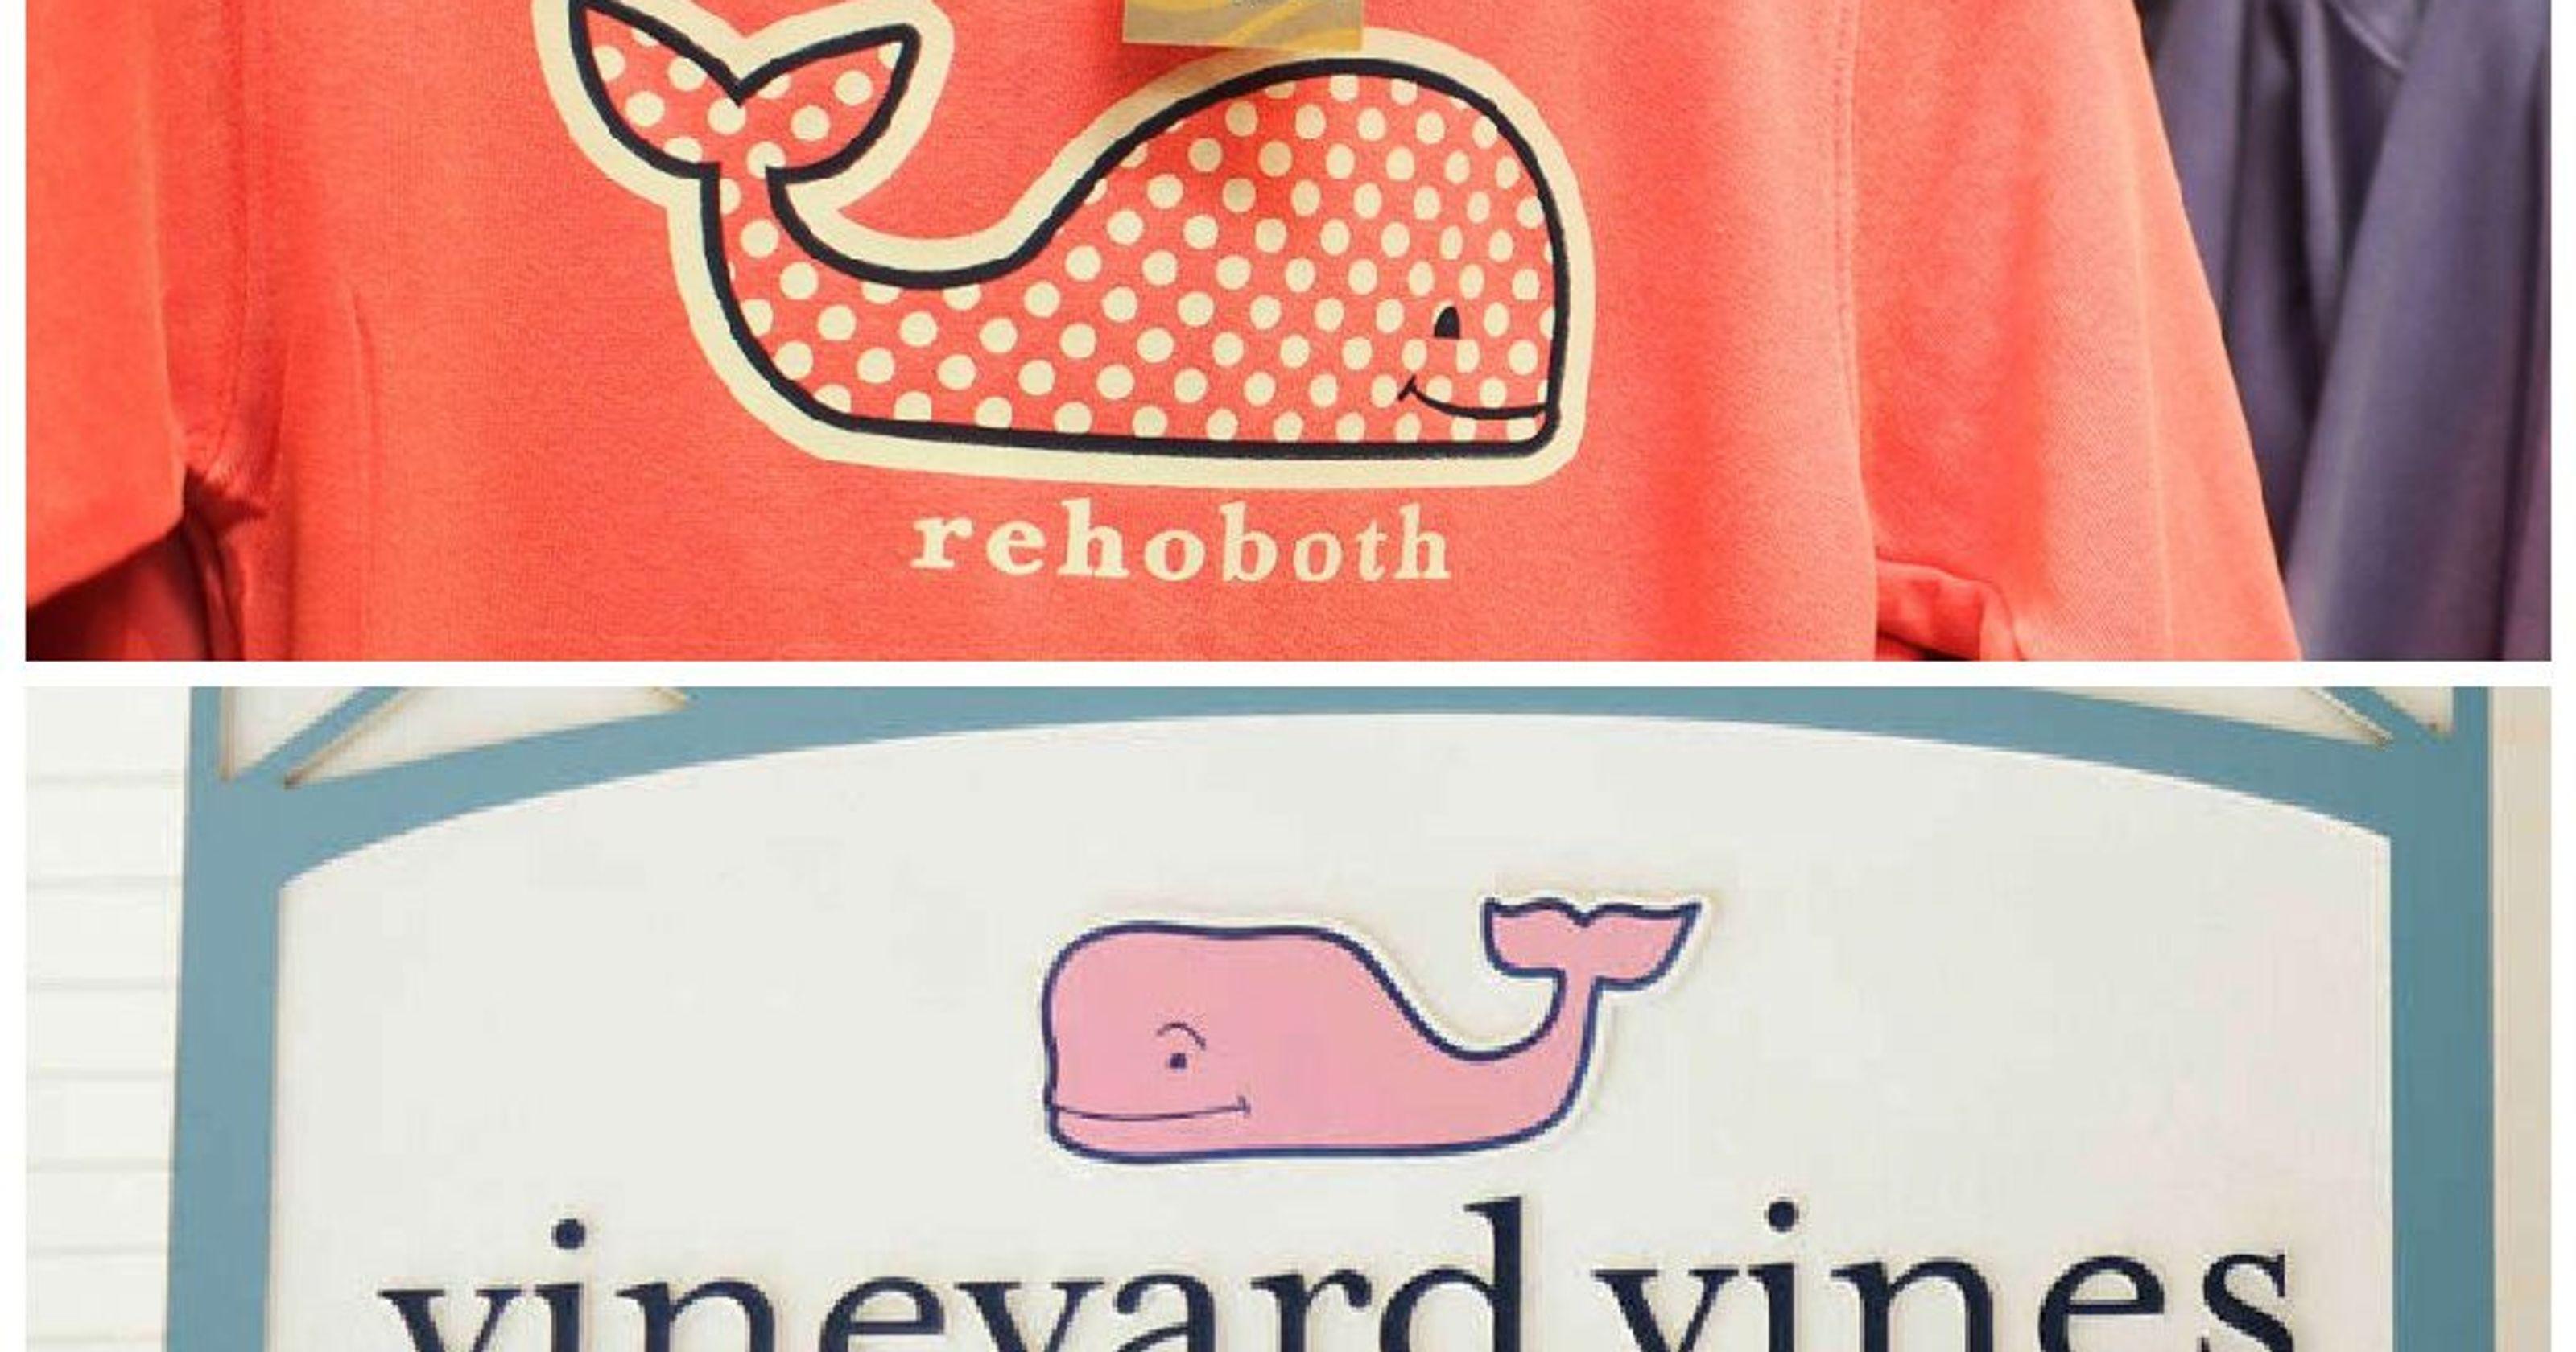 Vineyard Vines Logo - Vineyard Vines, Rehoboth Lifestyle shop clash over whale logos